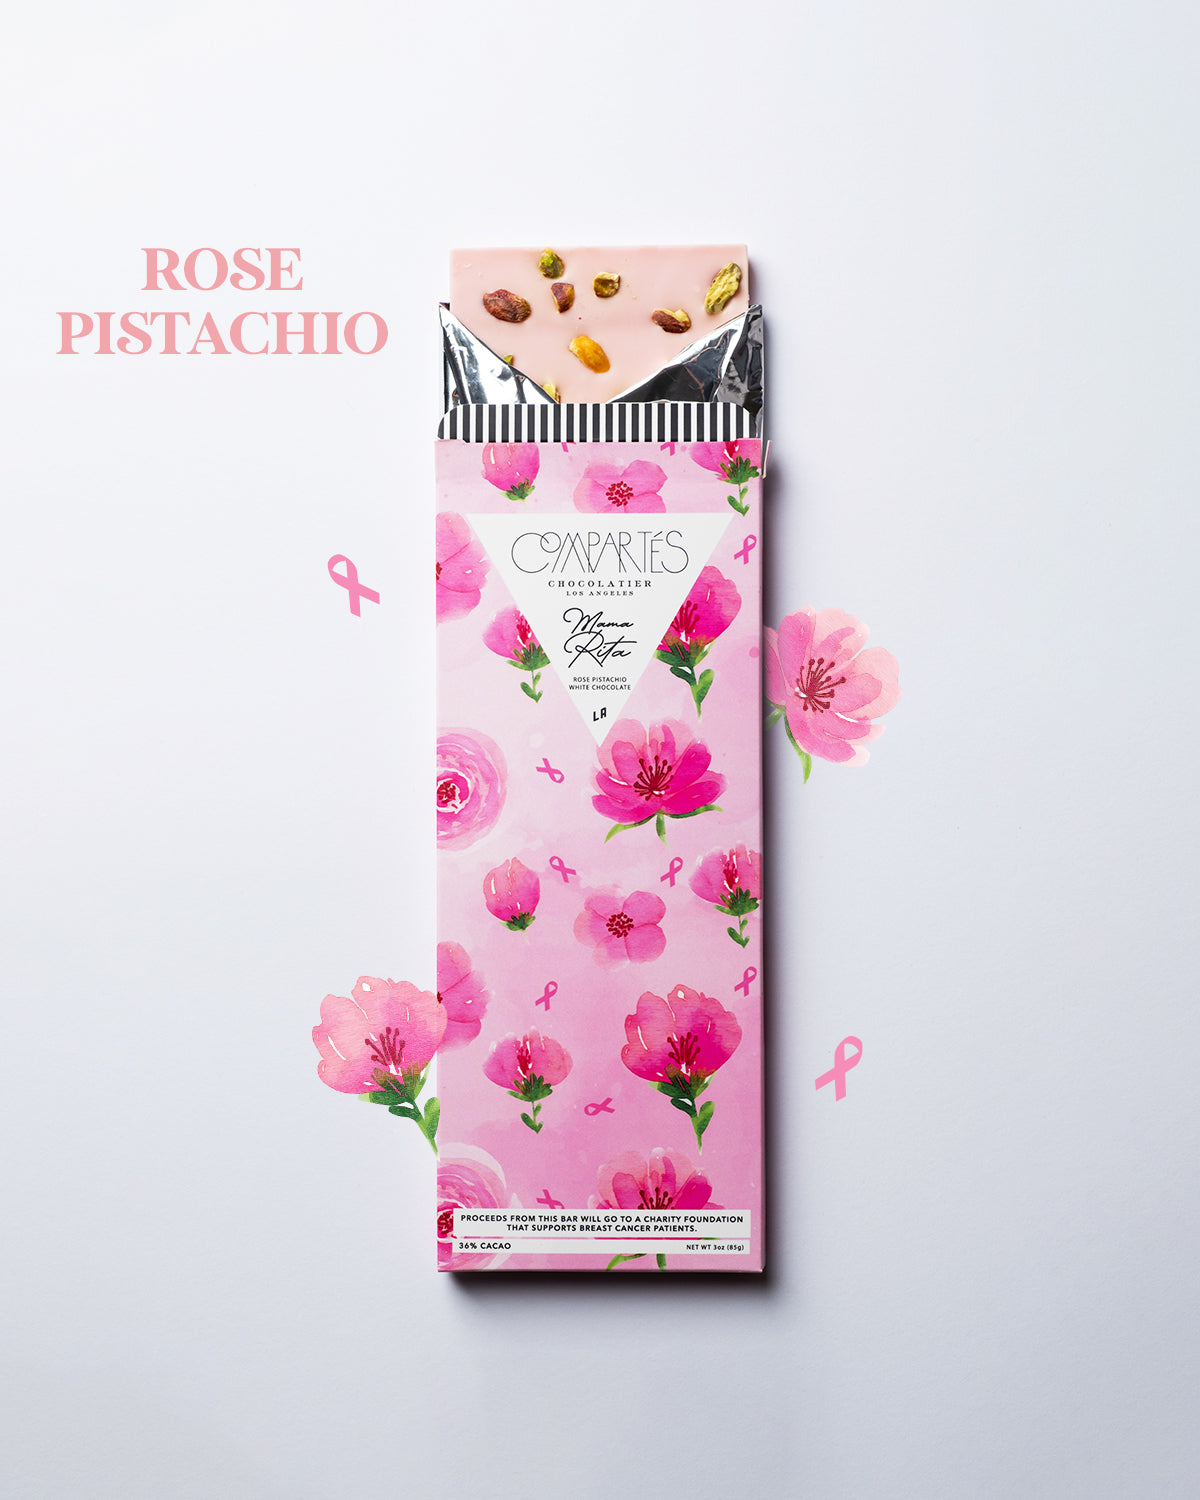 Compartes X Mama Rita - Breast Cancer Support Rose Pistachio White Chocolate